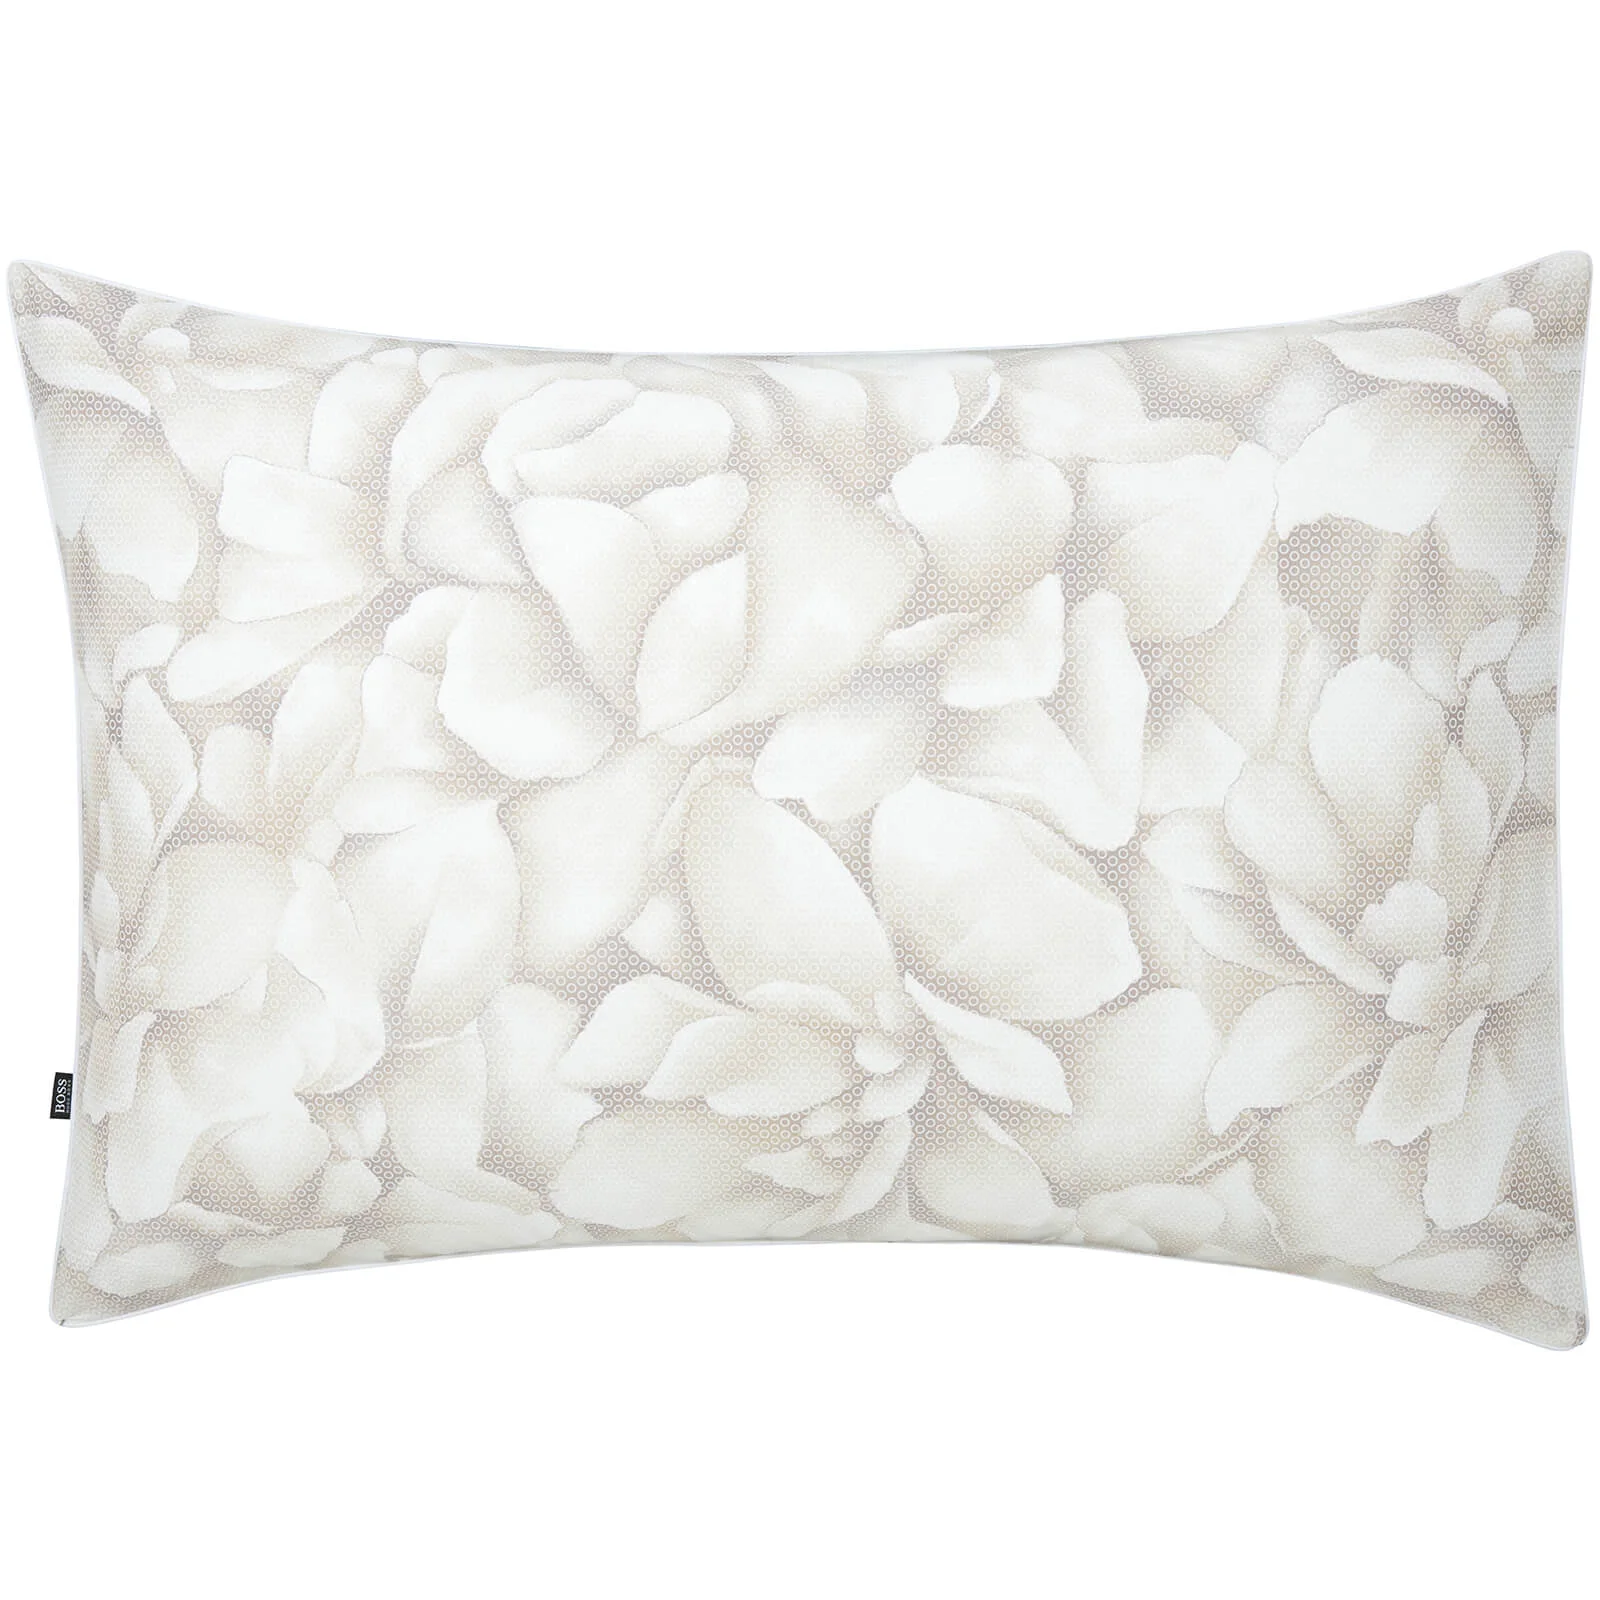 Hugo BOSS Opalia Pearl Standard Pillowcase Image 1